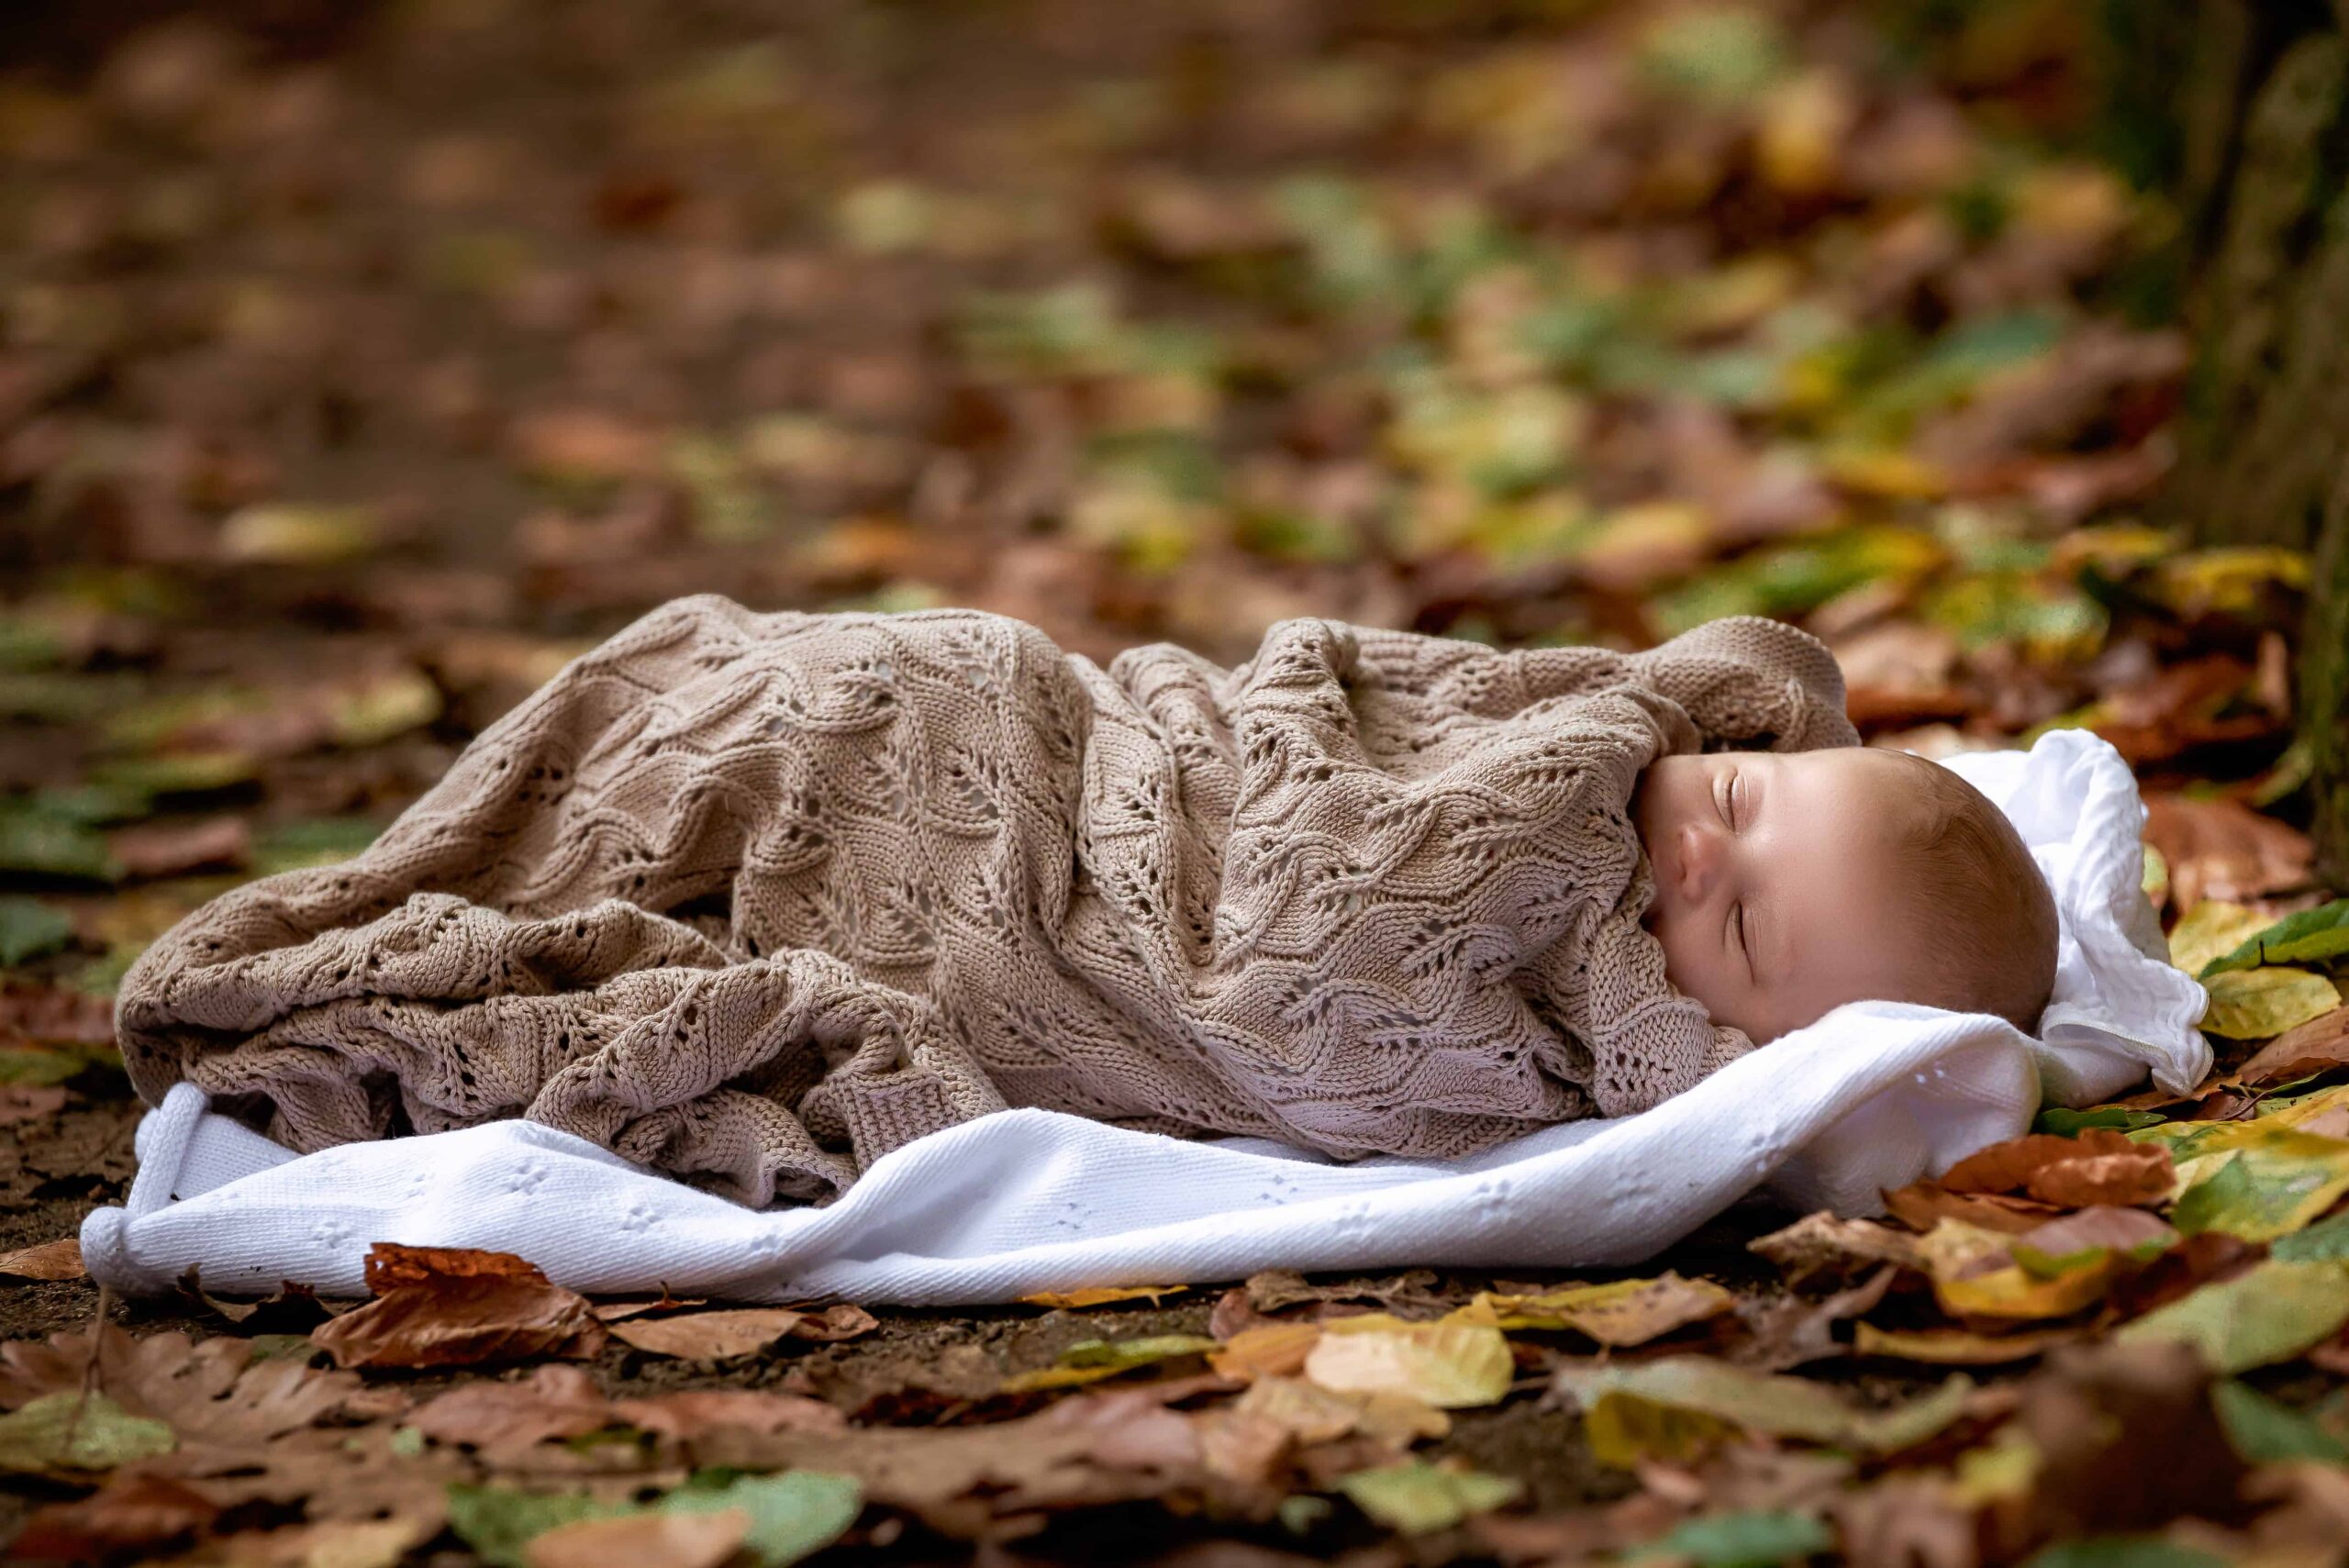 Professional photo of newborn baby asleep amongst the Autumn leaves